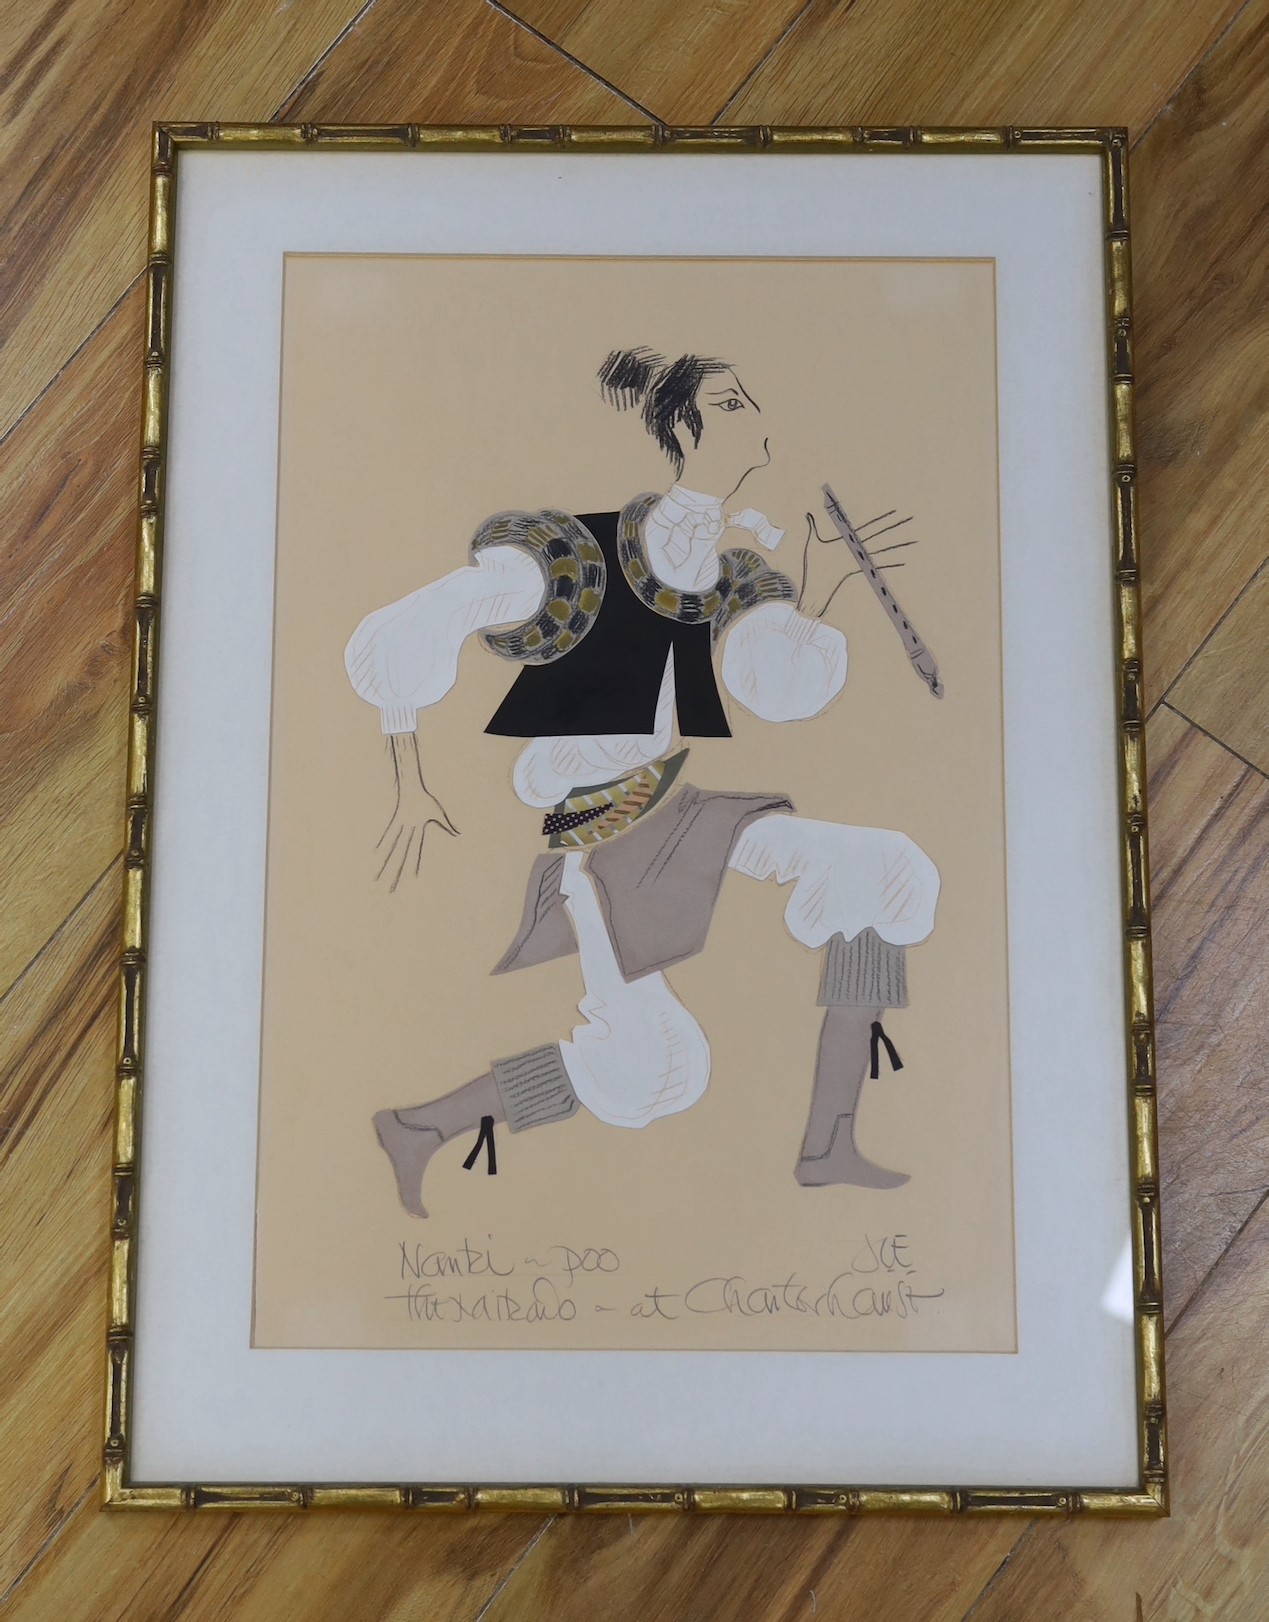 Joyce Conwy Evans, 'Nanki- poo, The Mikado at Charterhouse', conté crayon and collage, 48 x 32cm